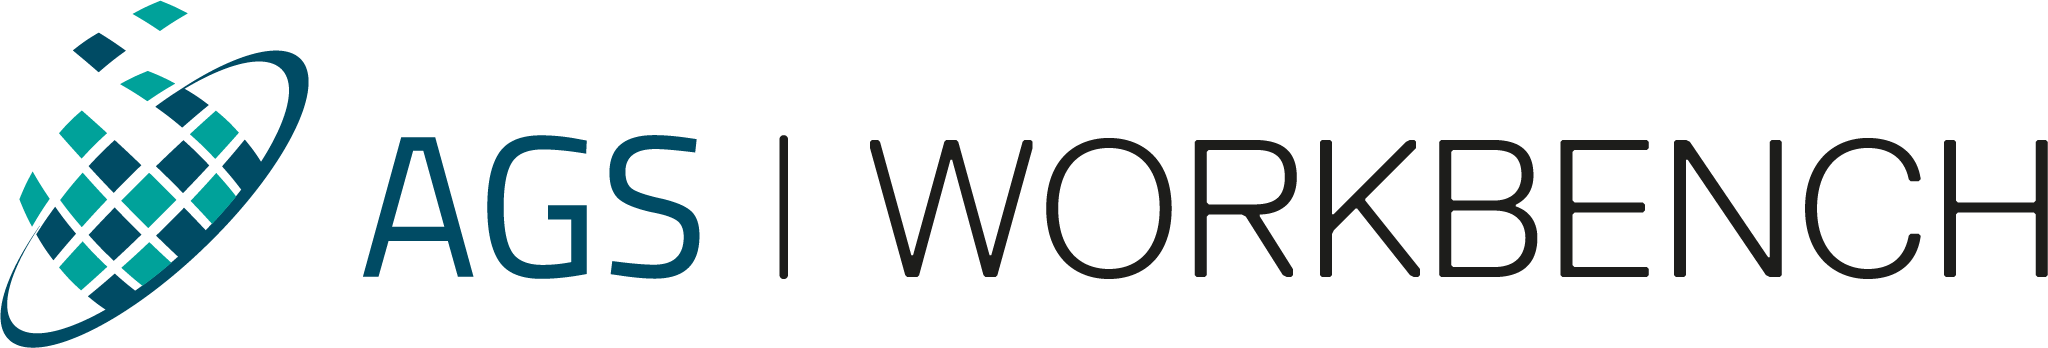 AGS Workbench logo